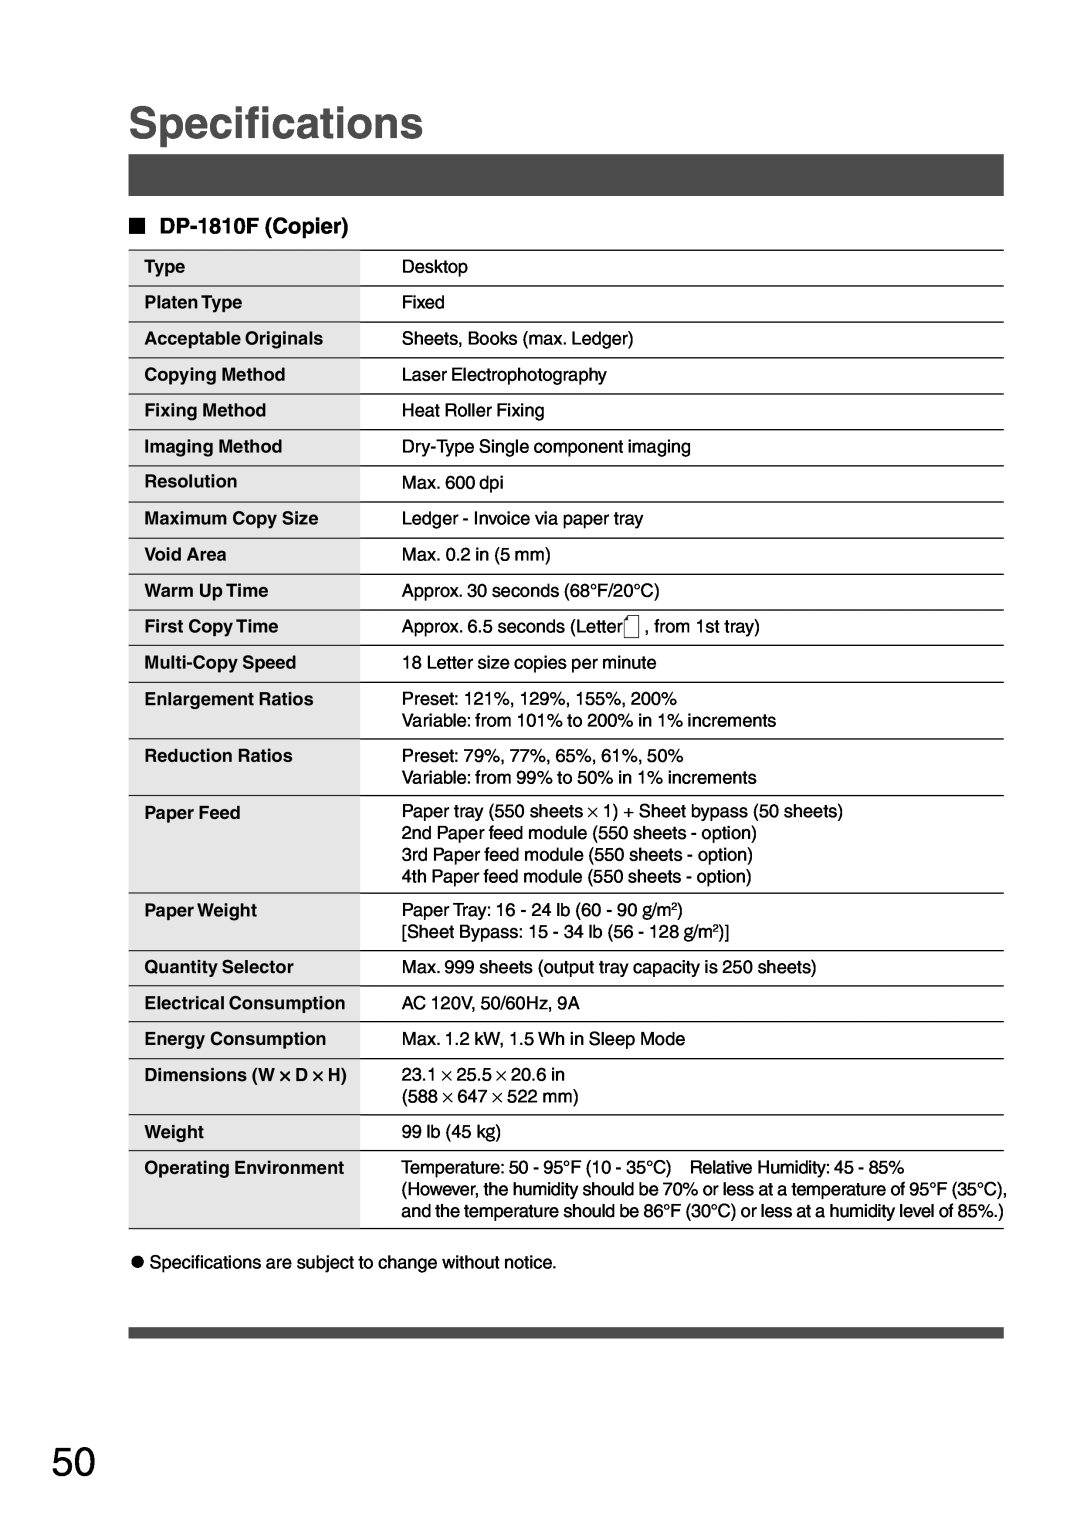 Panasonic manual Specifications, DP-1810F Copier 